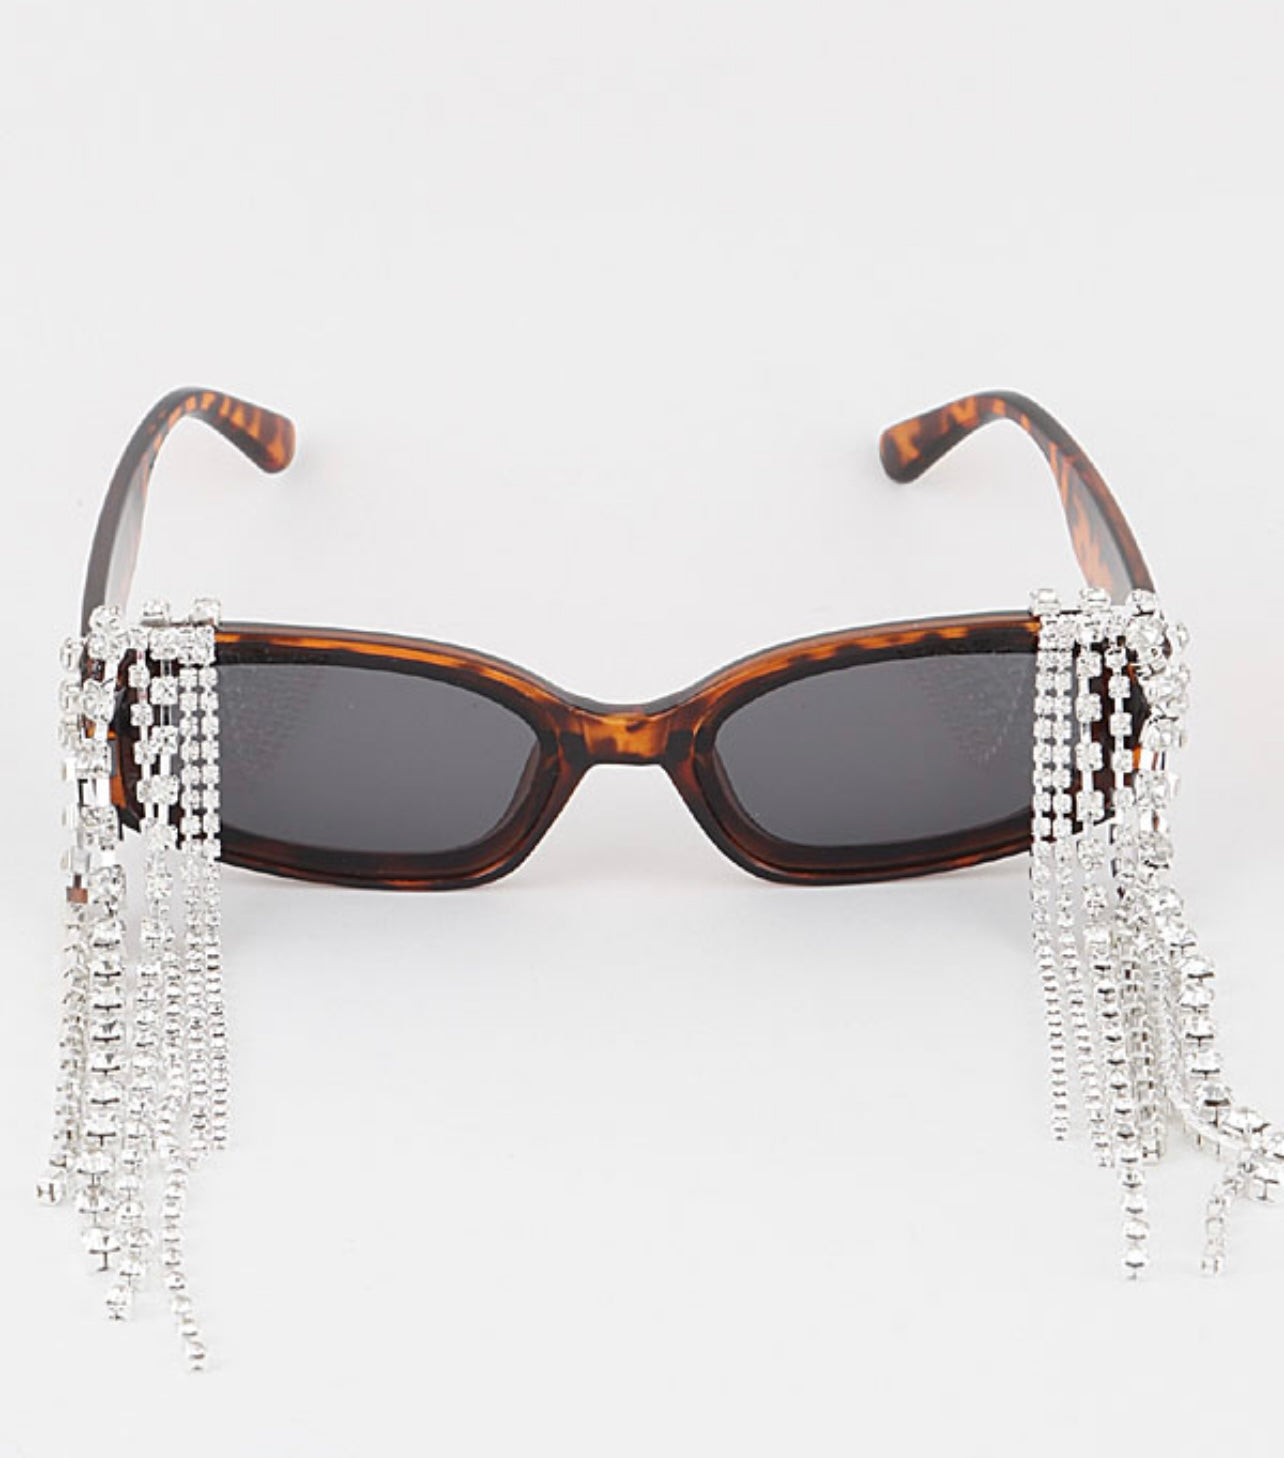 Les Rhinestone Sunglasses